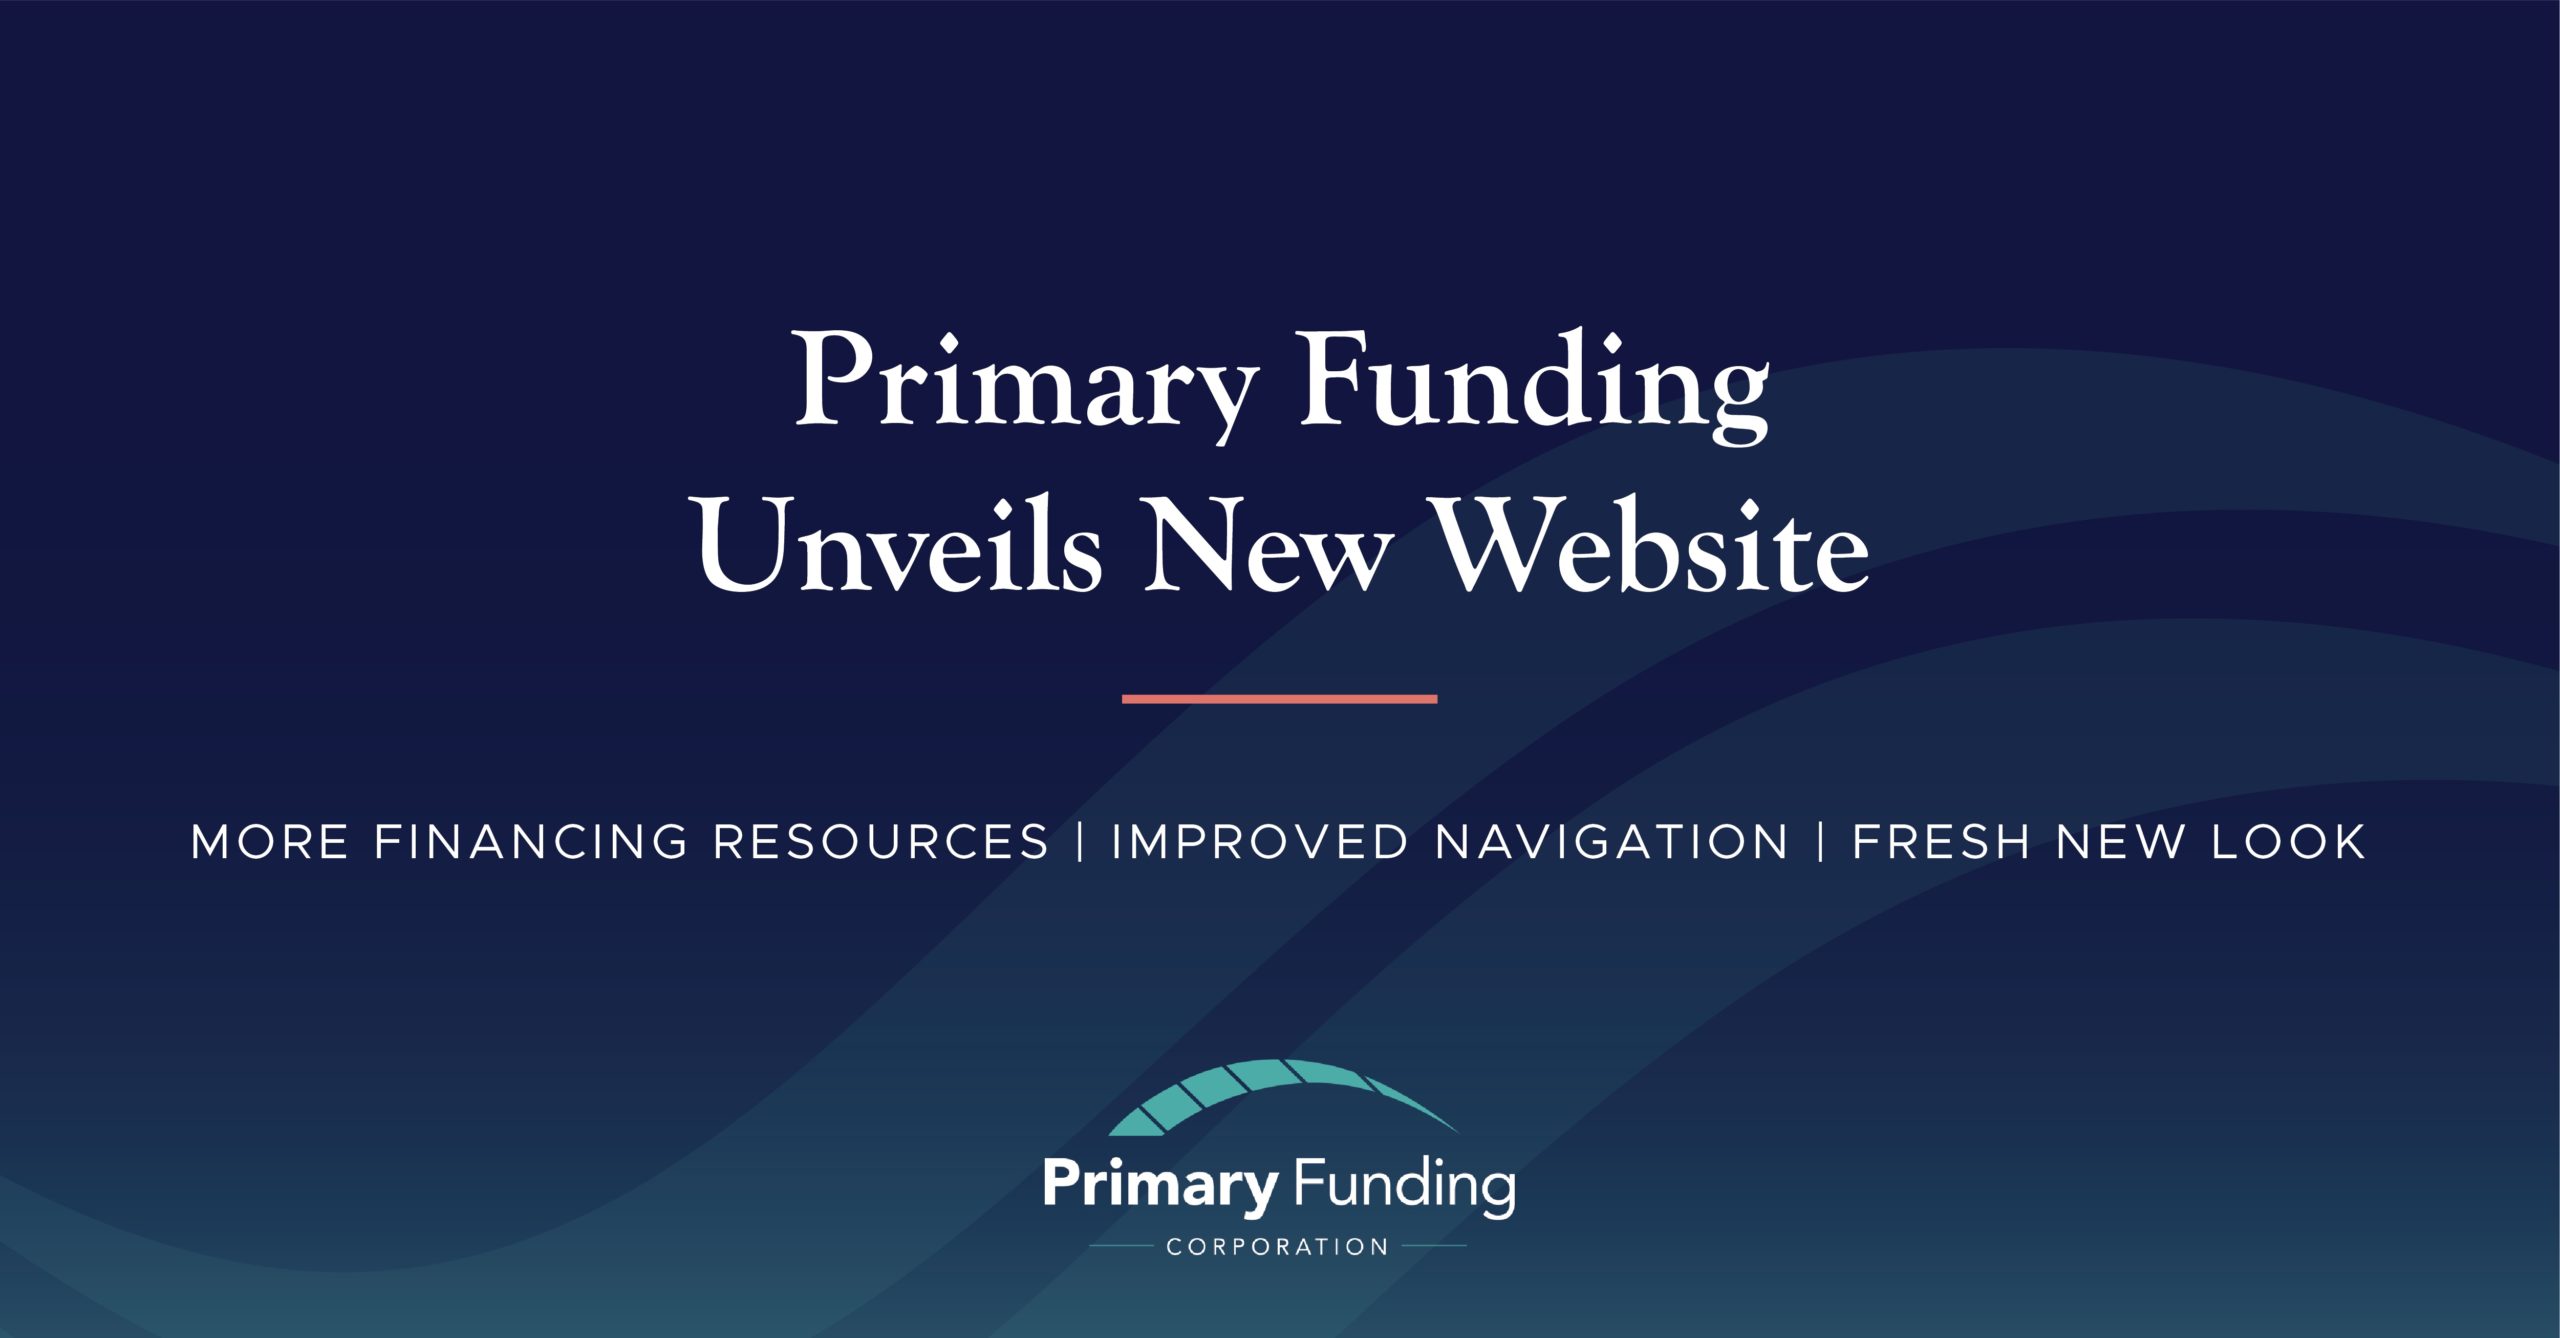 Primary Funding Unveils New Website post image